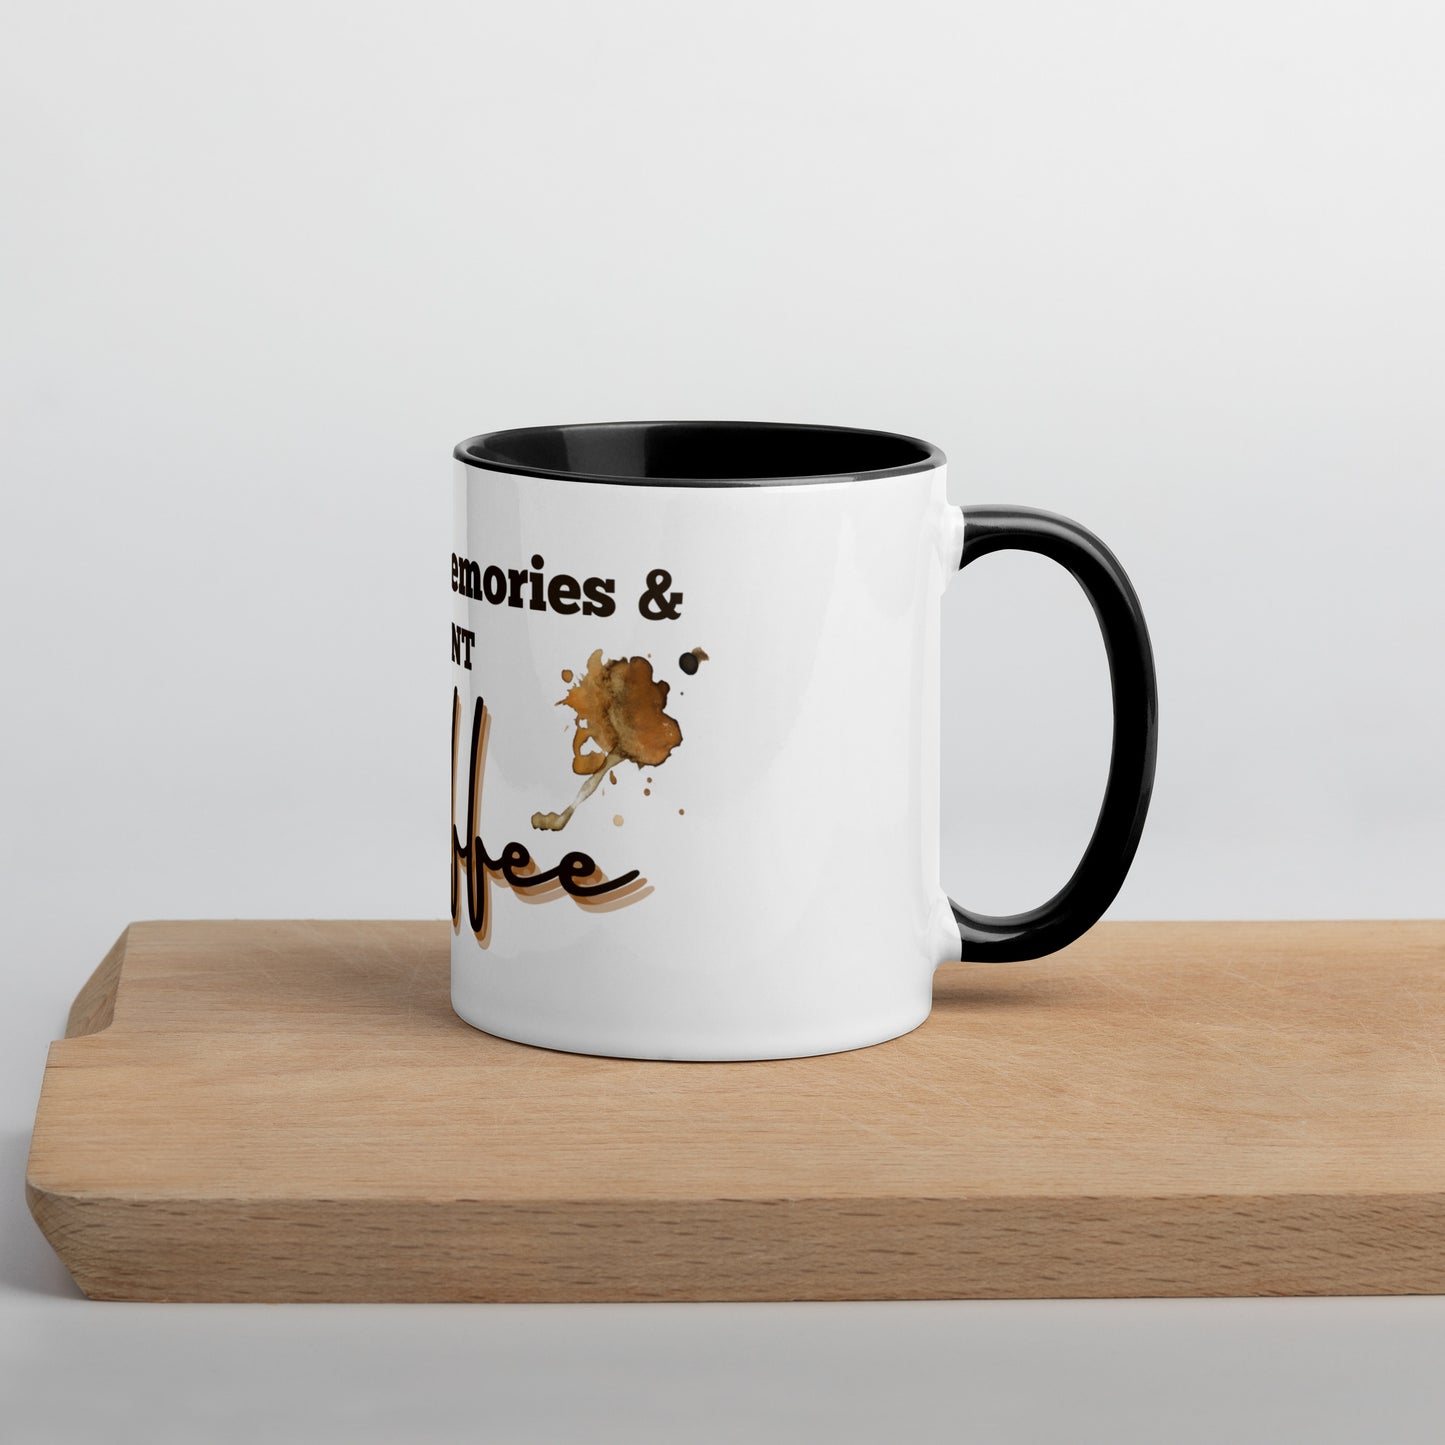 Burnt Coffee Mug